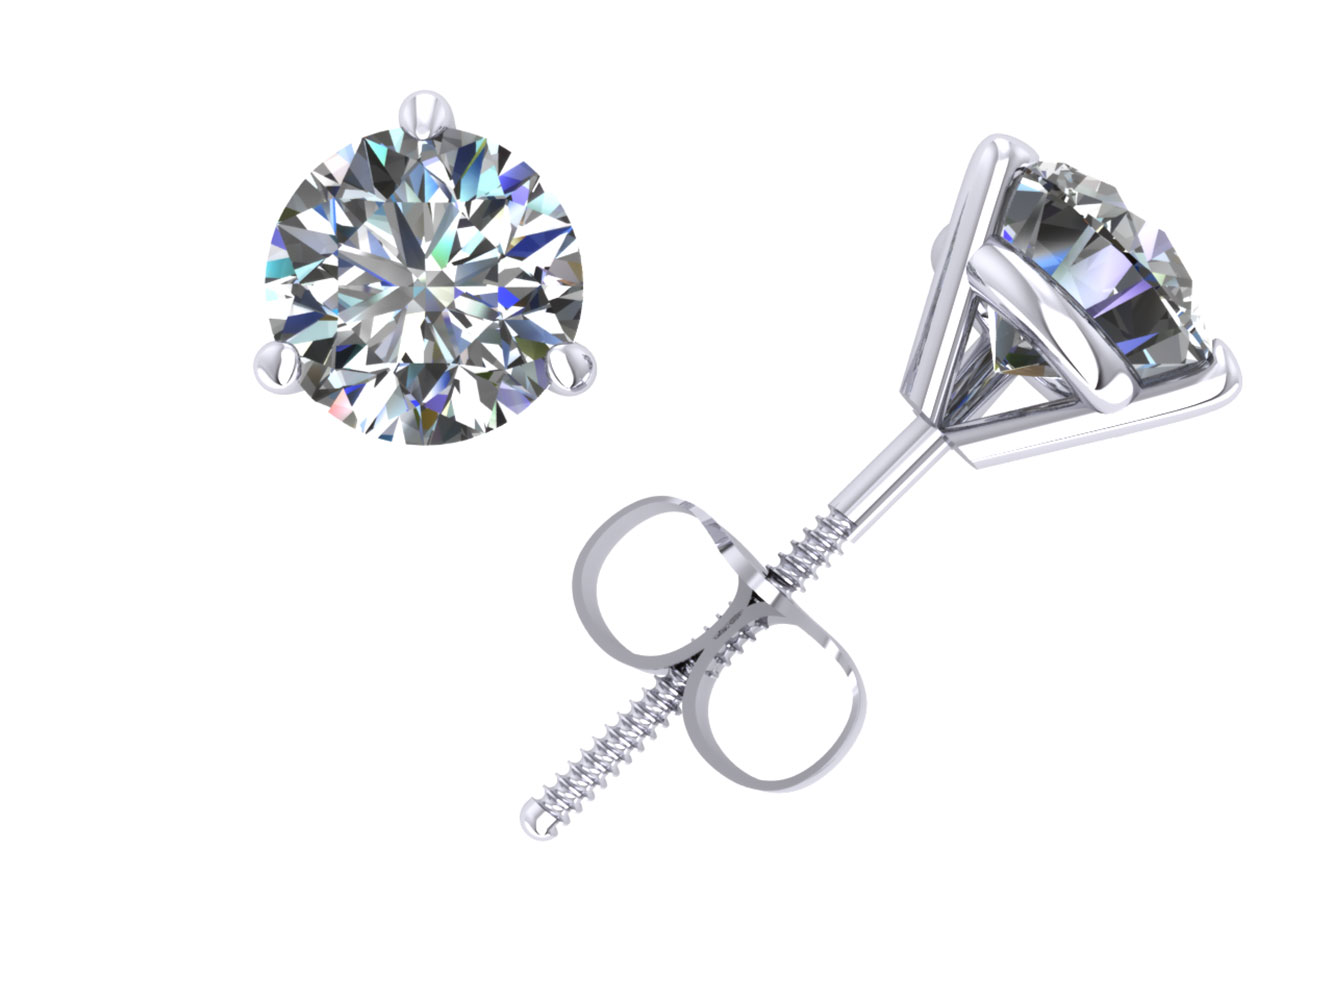 Jewel We Sell 1.25Carat Round Cut Diamond Martini Stud Earrings 14k White or Yellow Gold Prong Set I SI2